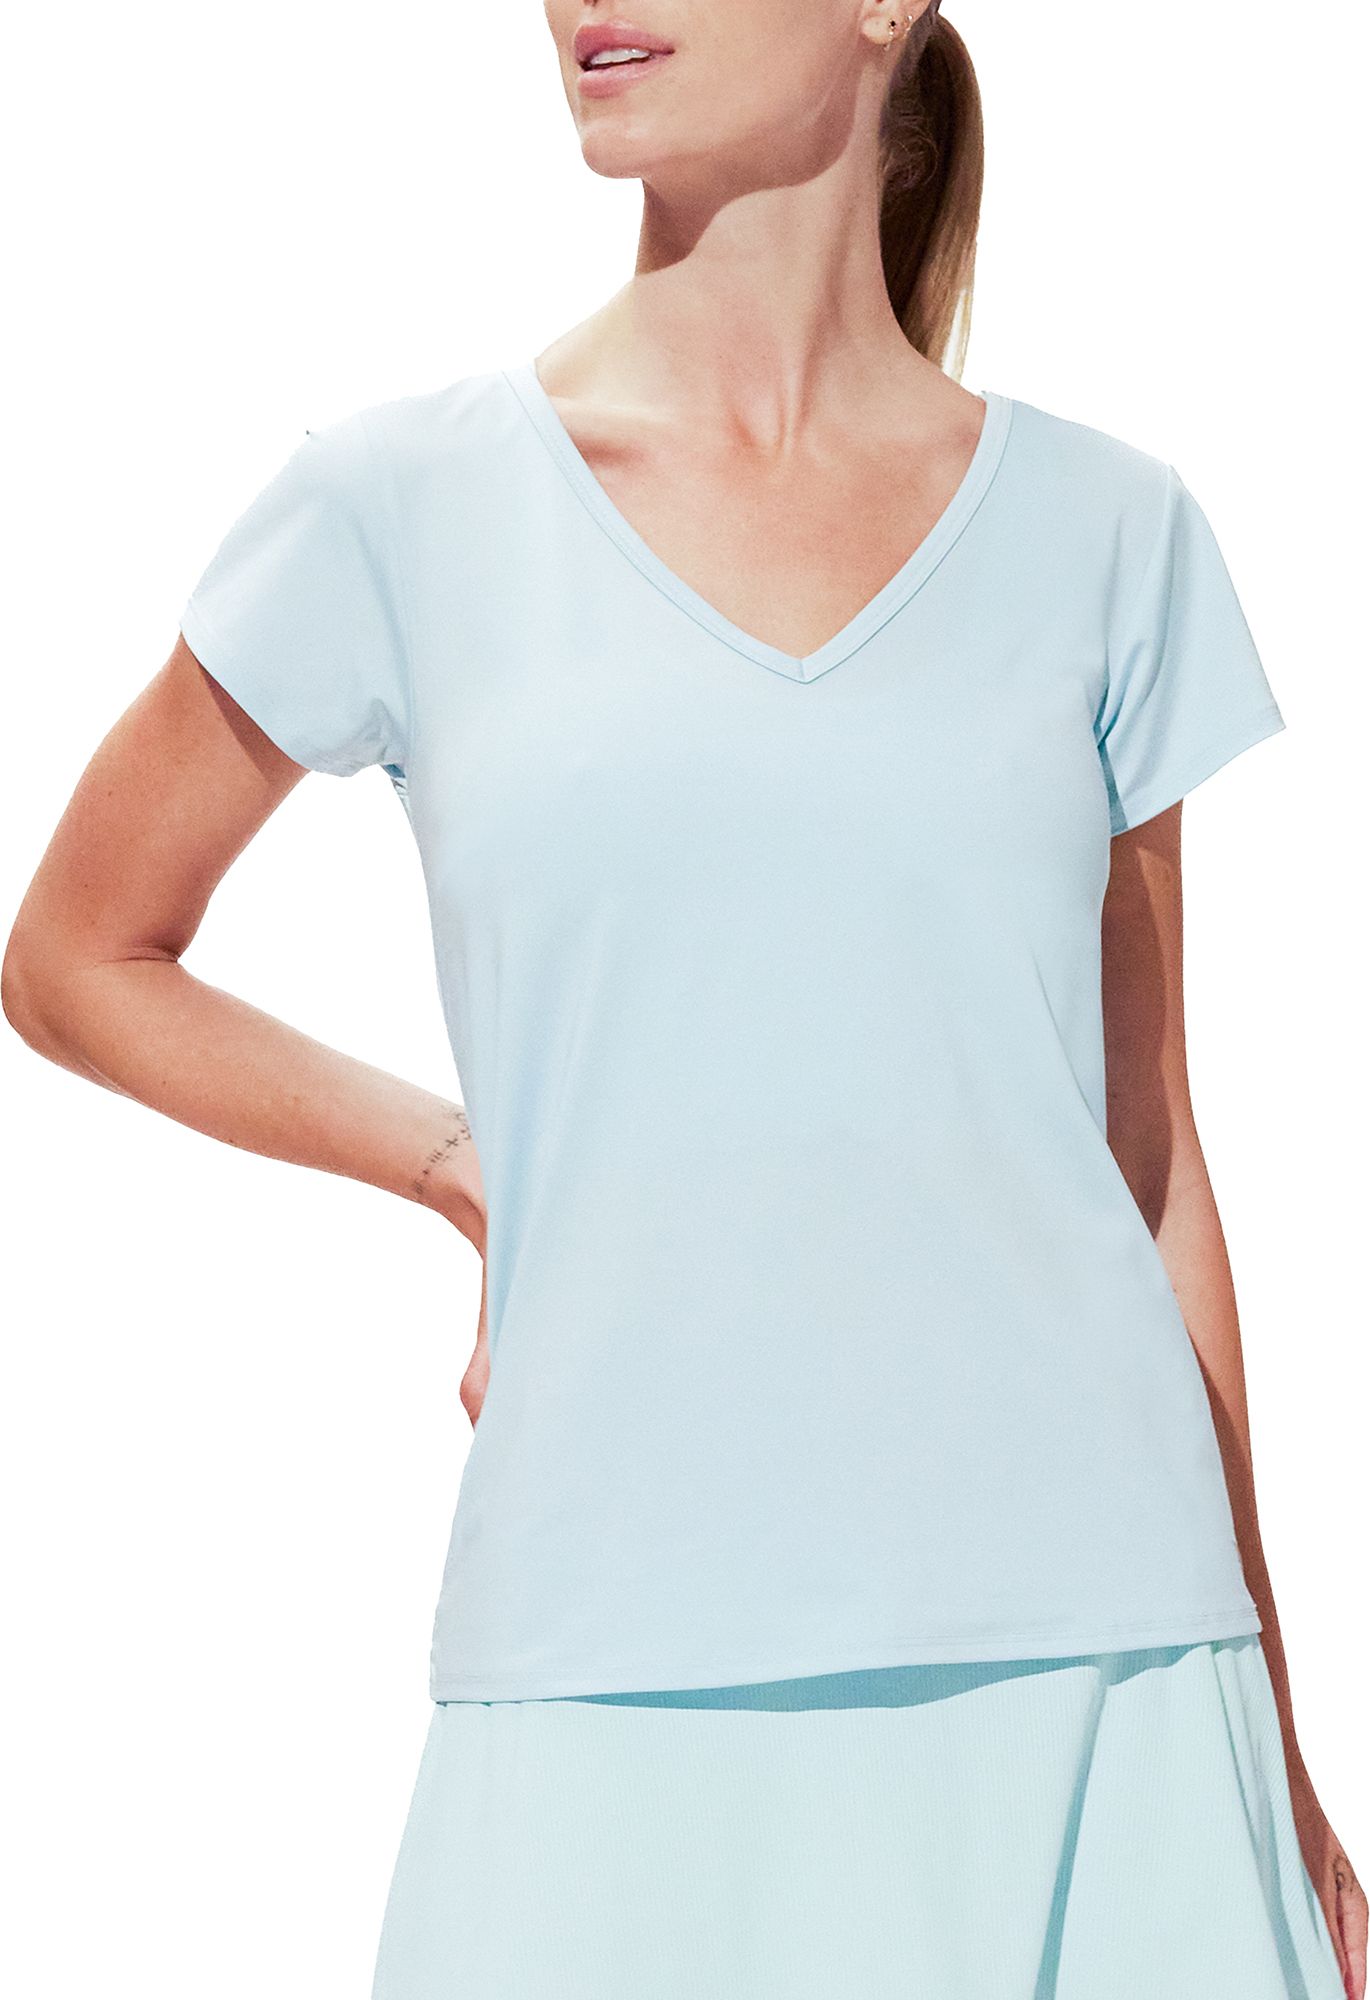 EleVen by Venus Williams Women's Match Point Short Sleeve Tennis Shirt